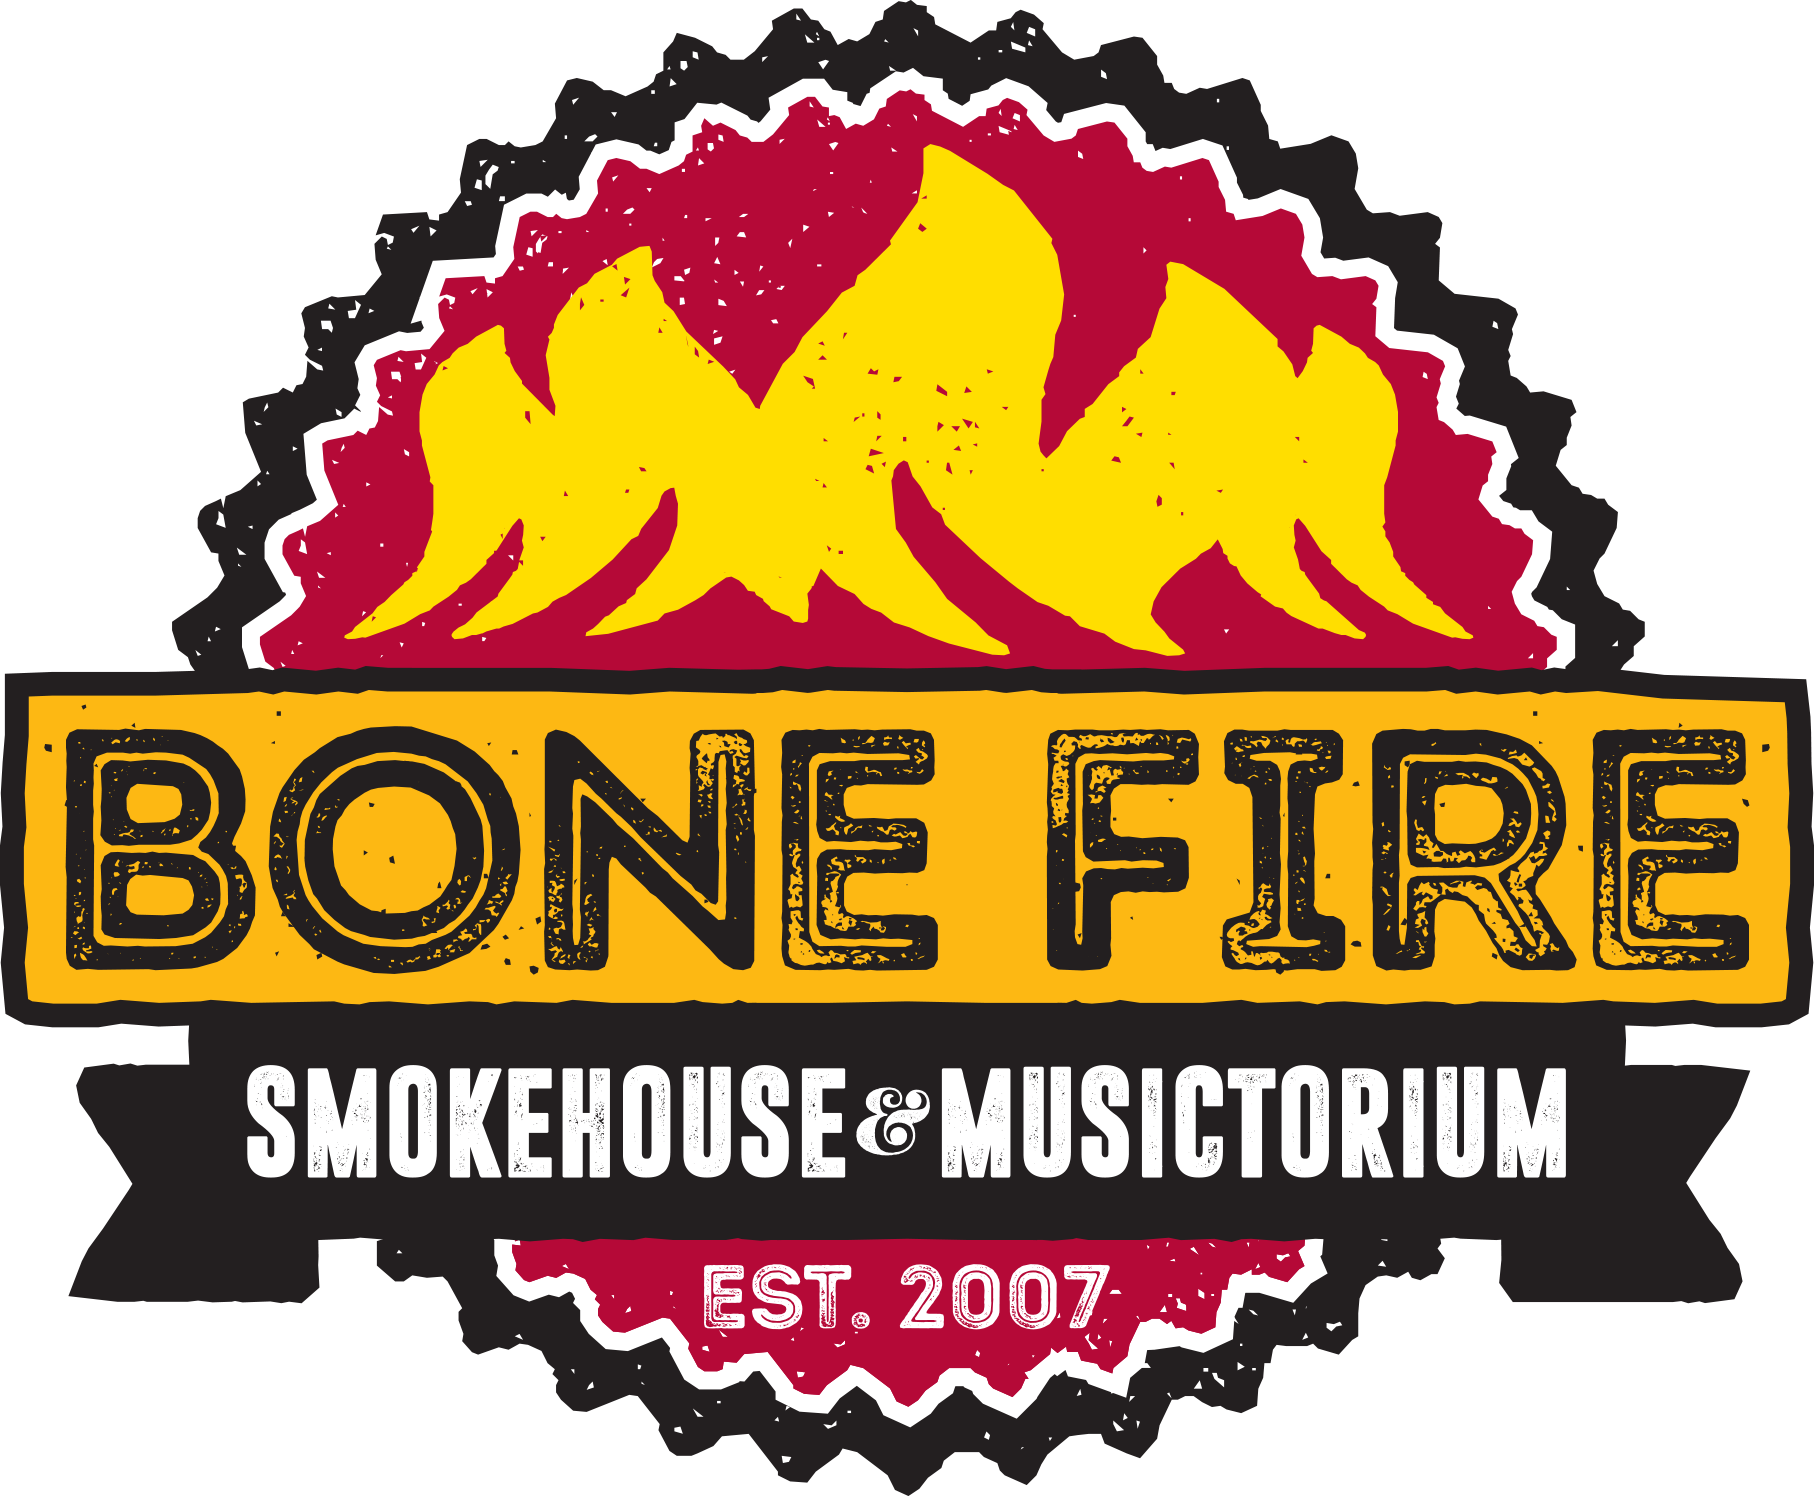 The Bonefire Smokehouse Restaurant